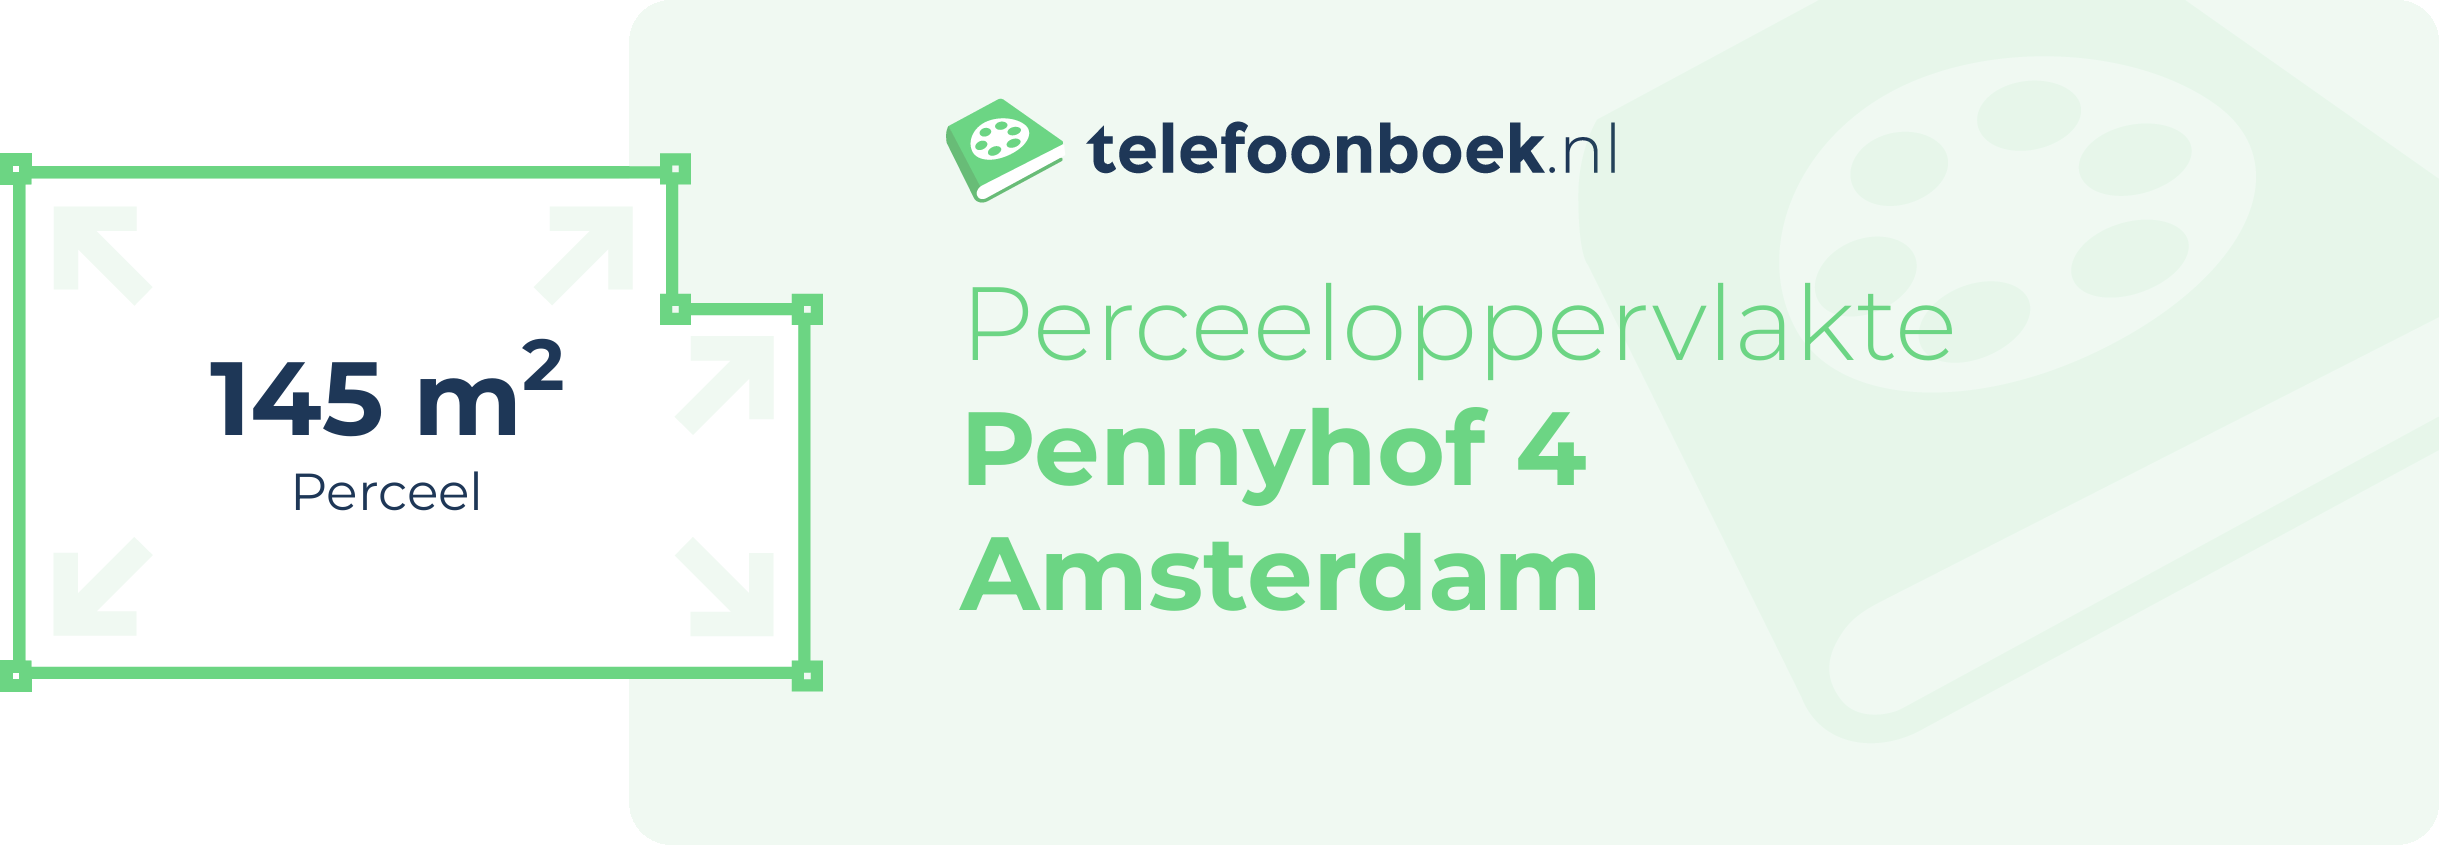 Perceeloppervlakte Pennyhof 4 Amsterdam